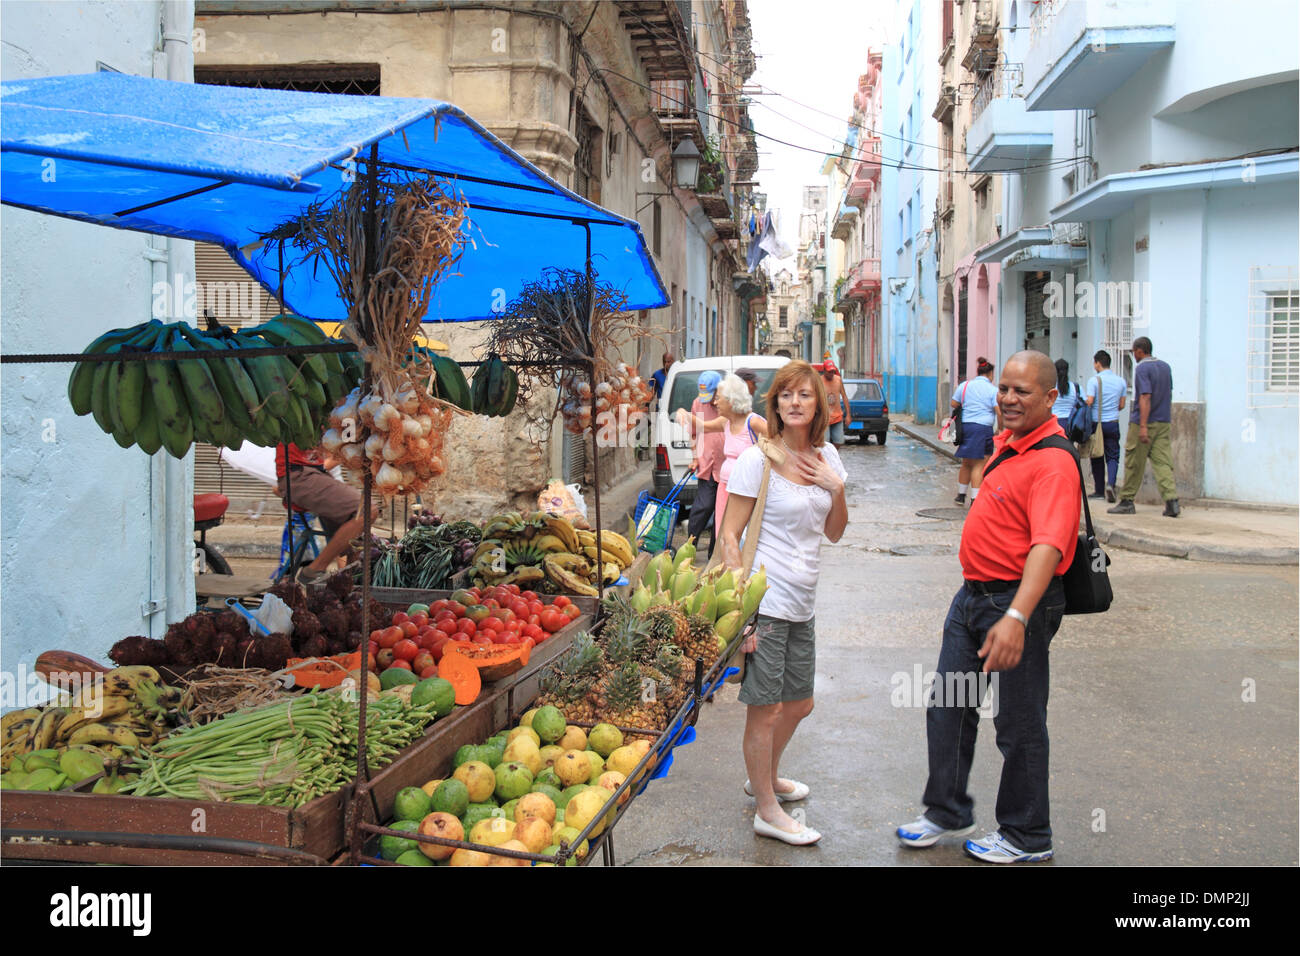 Obst und Gemüse stand, Calle Tejadillo, Alt-Havanna (La Habana Vieja), Kuba, Karibik, Mittelamerika Stockfoto